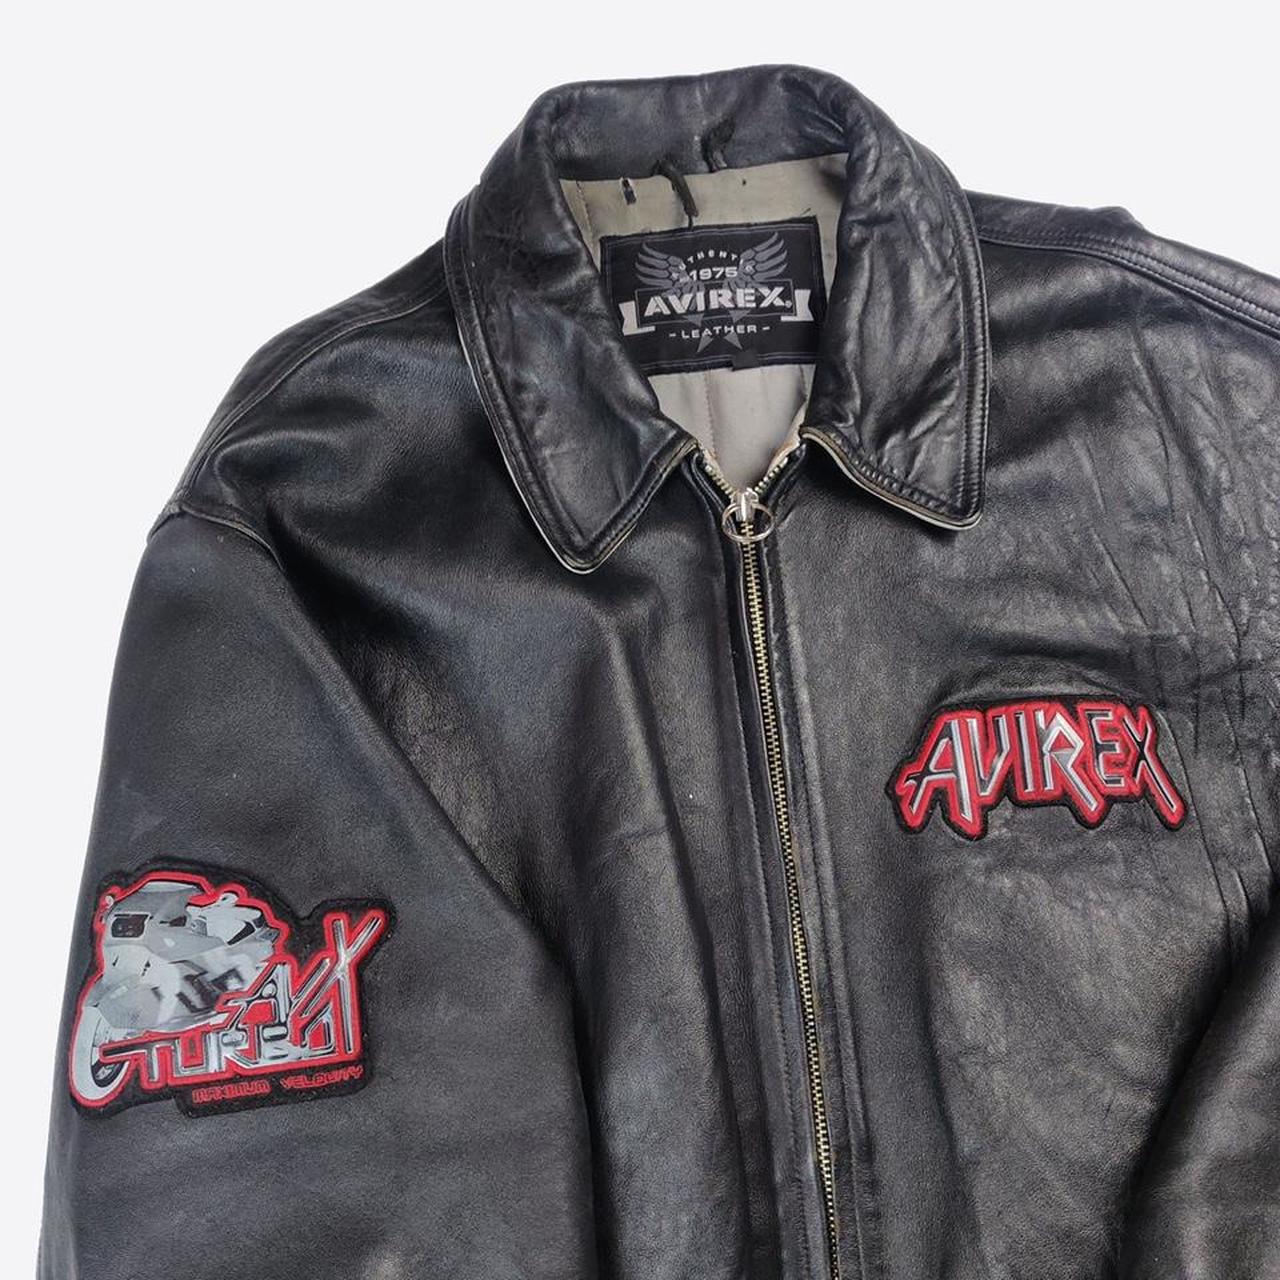 VINTAGE AVIREX JACKET Vintage Avirex leather... - Depop